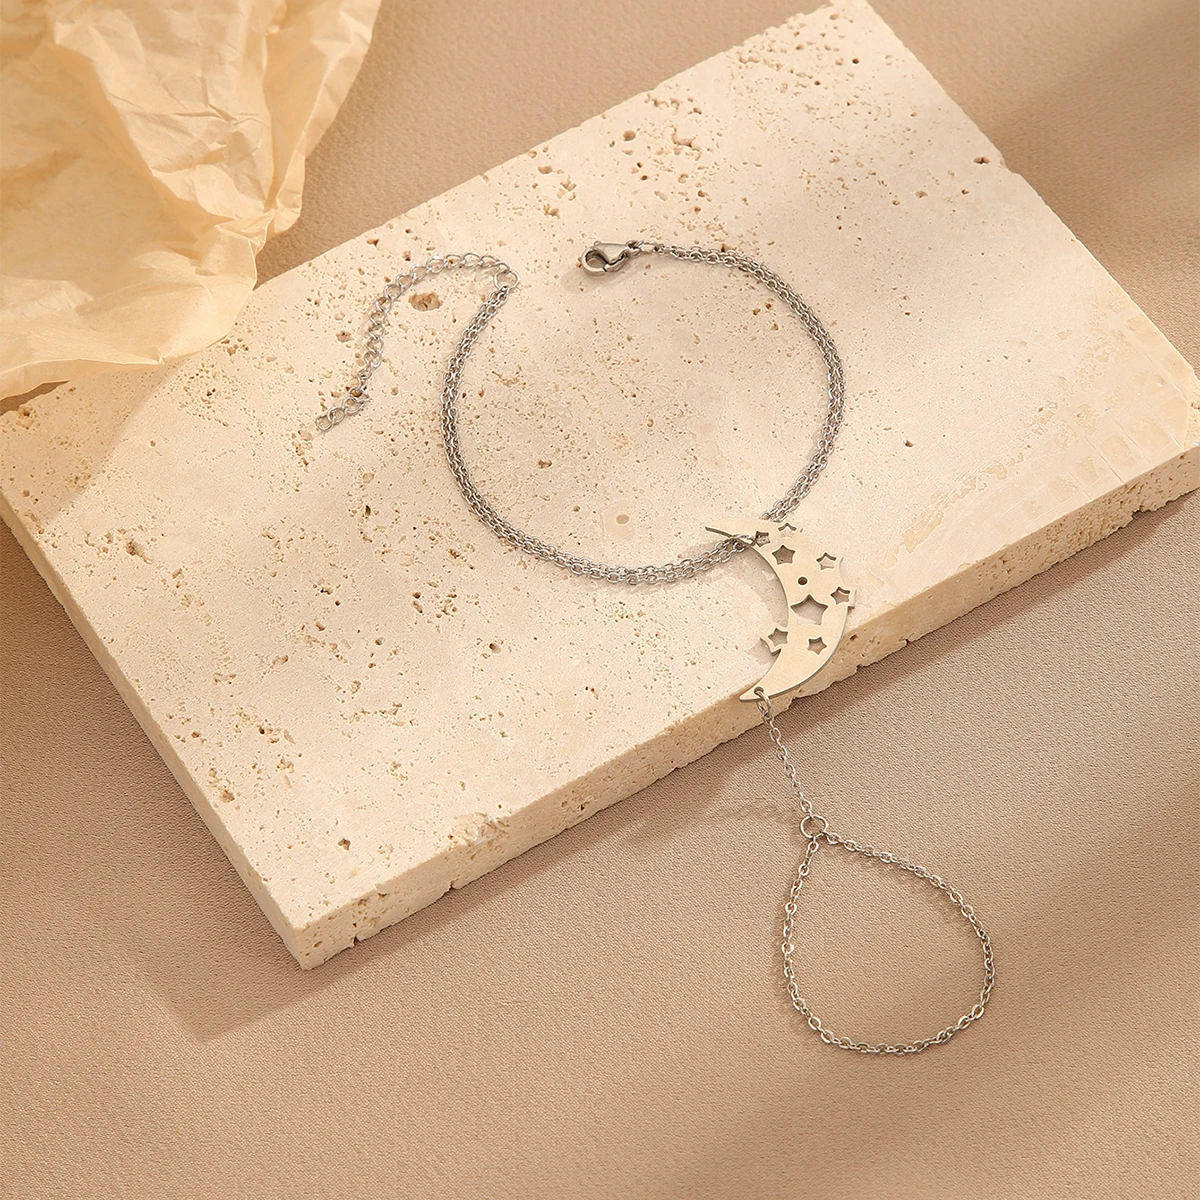 SHARALLE Meenakari Toe Rings for Women Stylish Oxidized Bands for Girls  –Bichiya chutki Toe Ring Plain Self Designs-set of 2 (KCTO-1) (Casual) :  Amazon.in: Jewellery